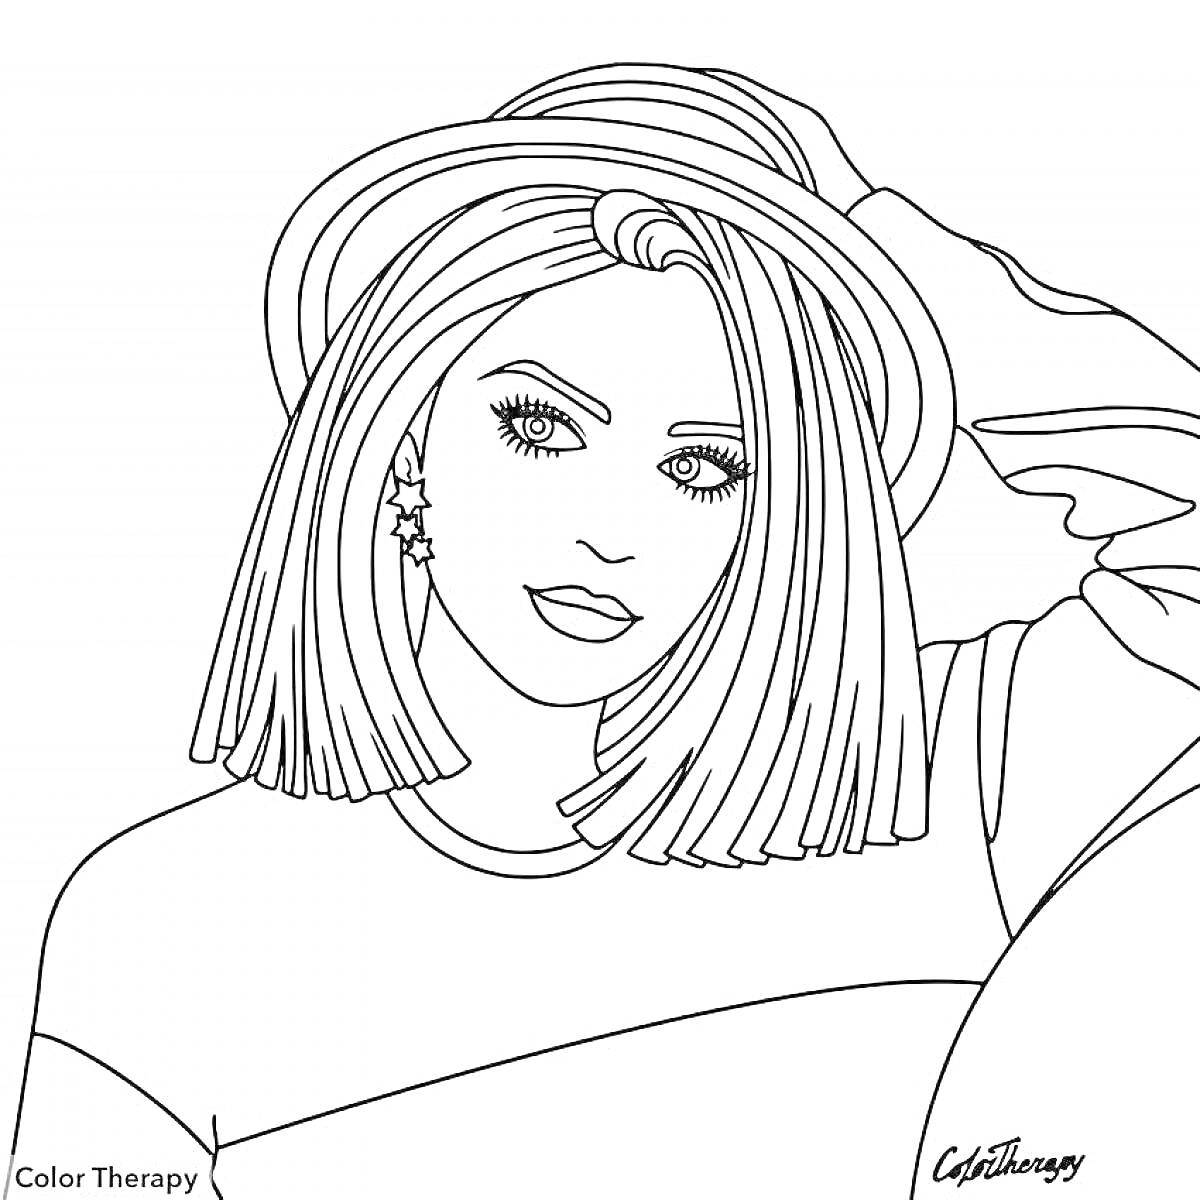 Раскраска Портрет девочки в шляпе с сережками в виде звезд